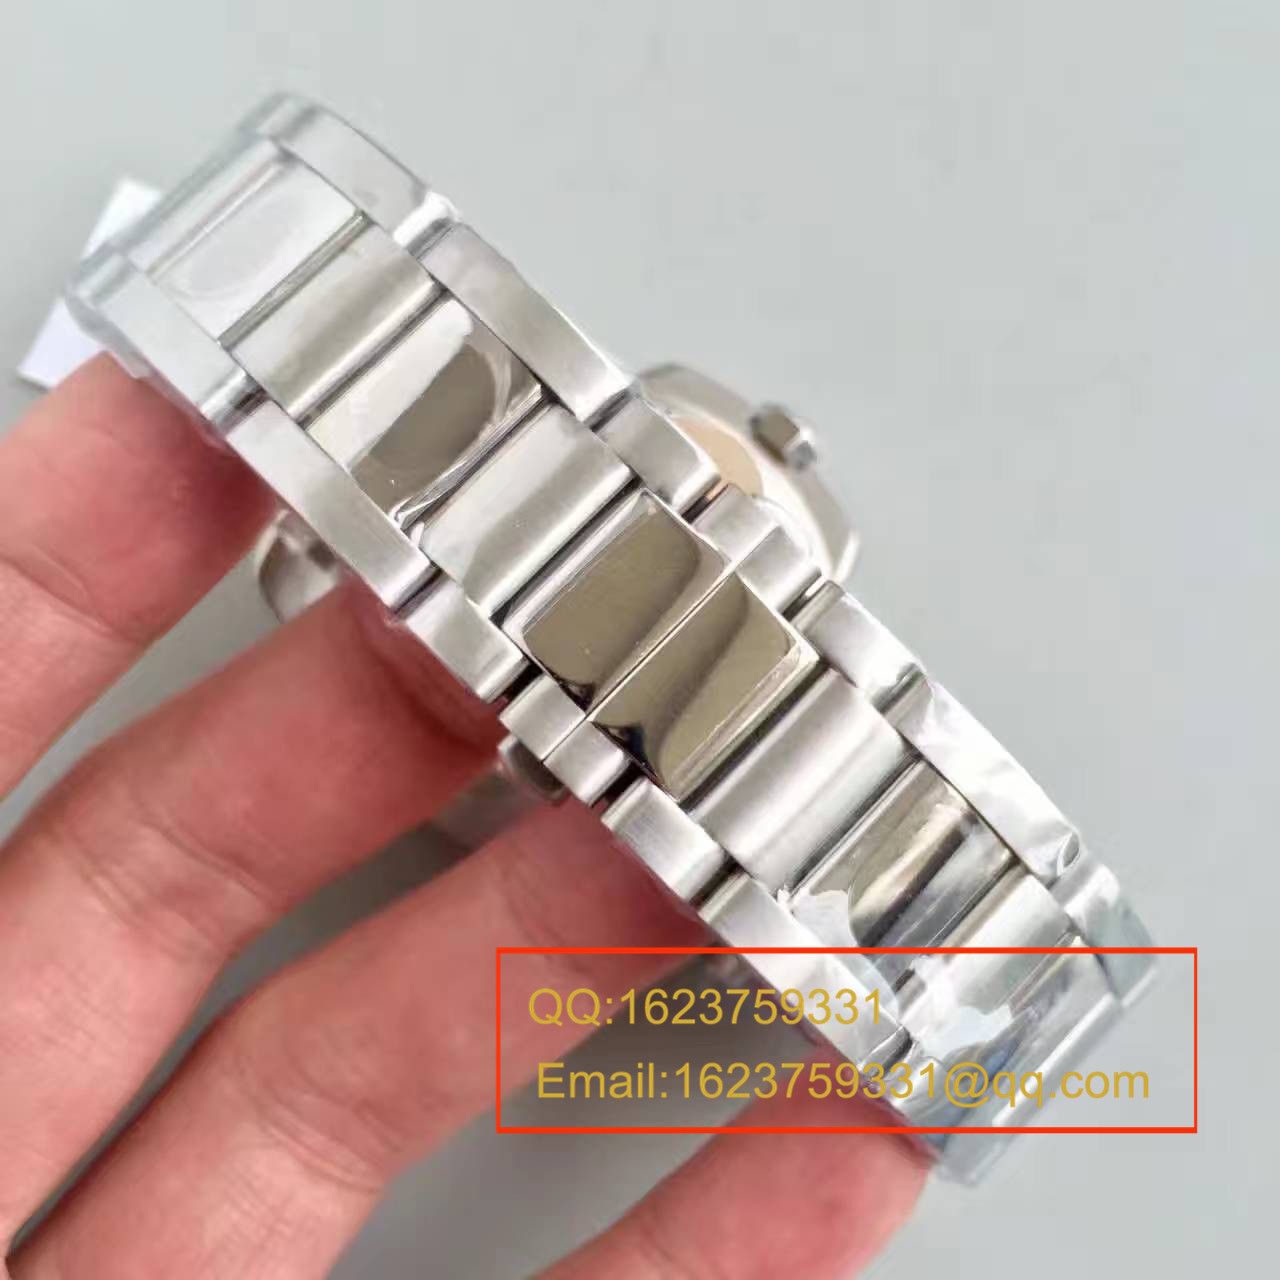 【JF厂顶级1:1复刻手表】卡地亚 CALIBRE DE CARTIER 系列 W7100016 腕表 精钢表带 / KDY024